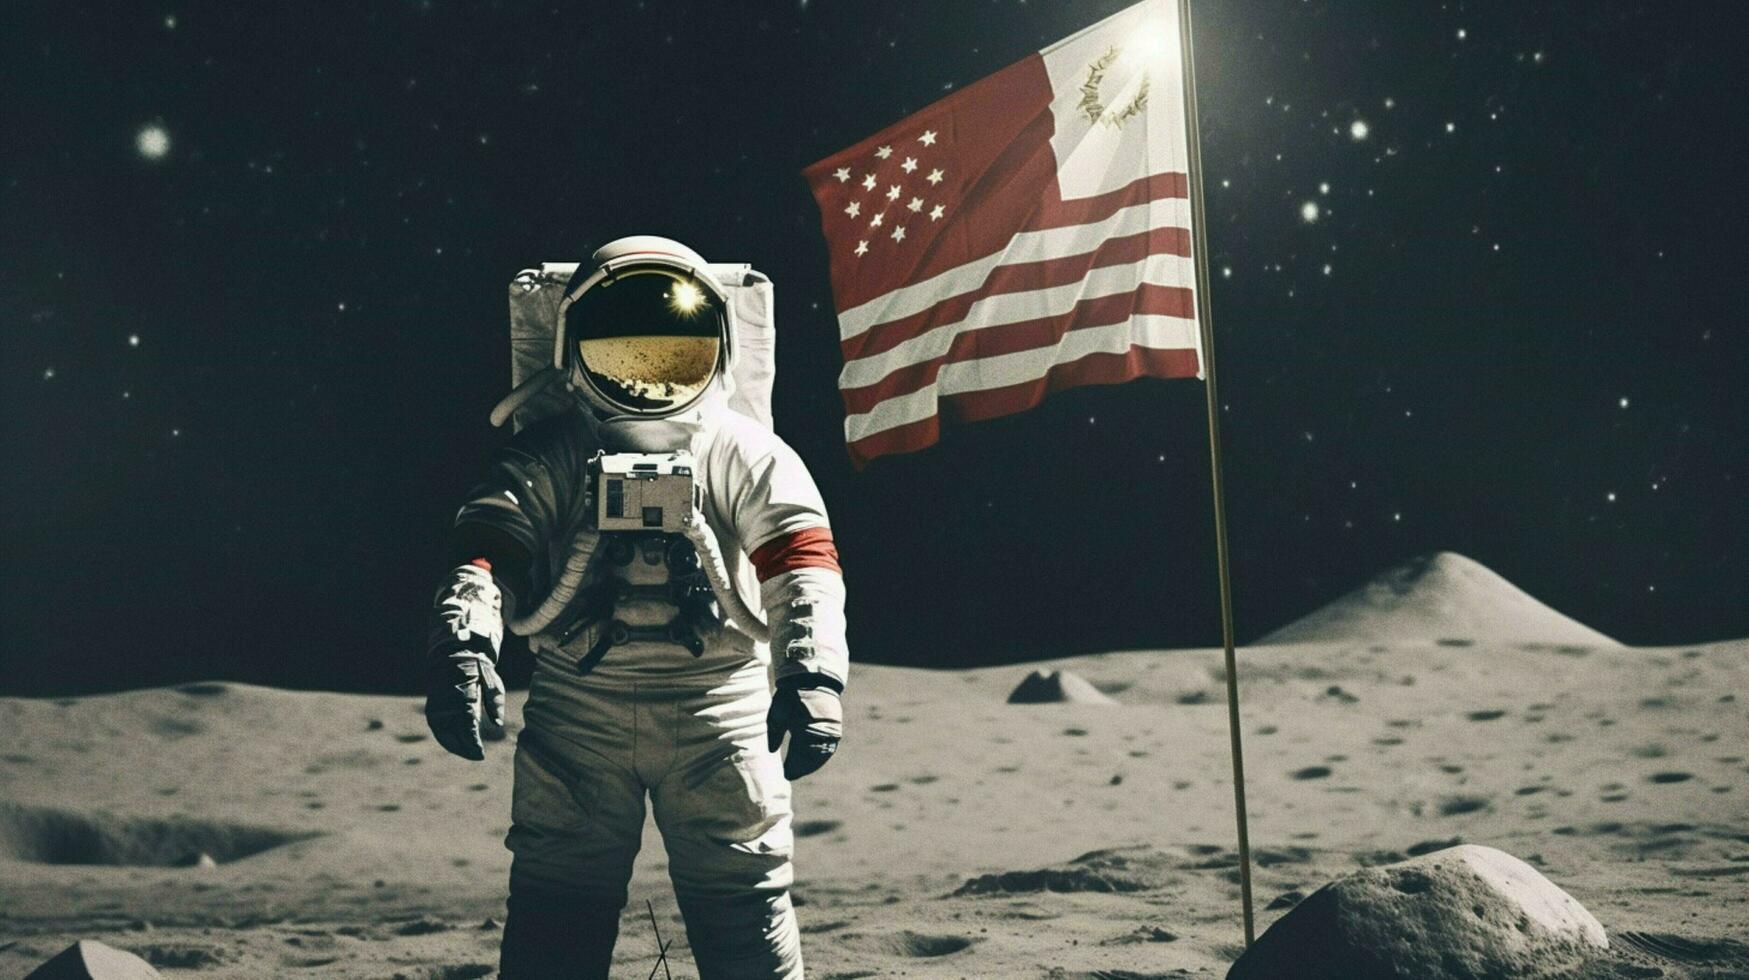 chino astronauta Luna con bandera foto